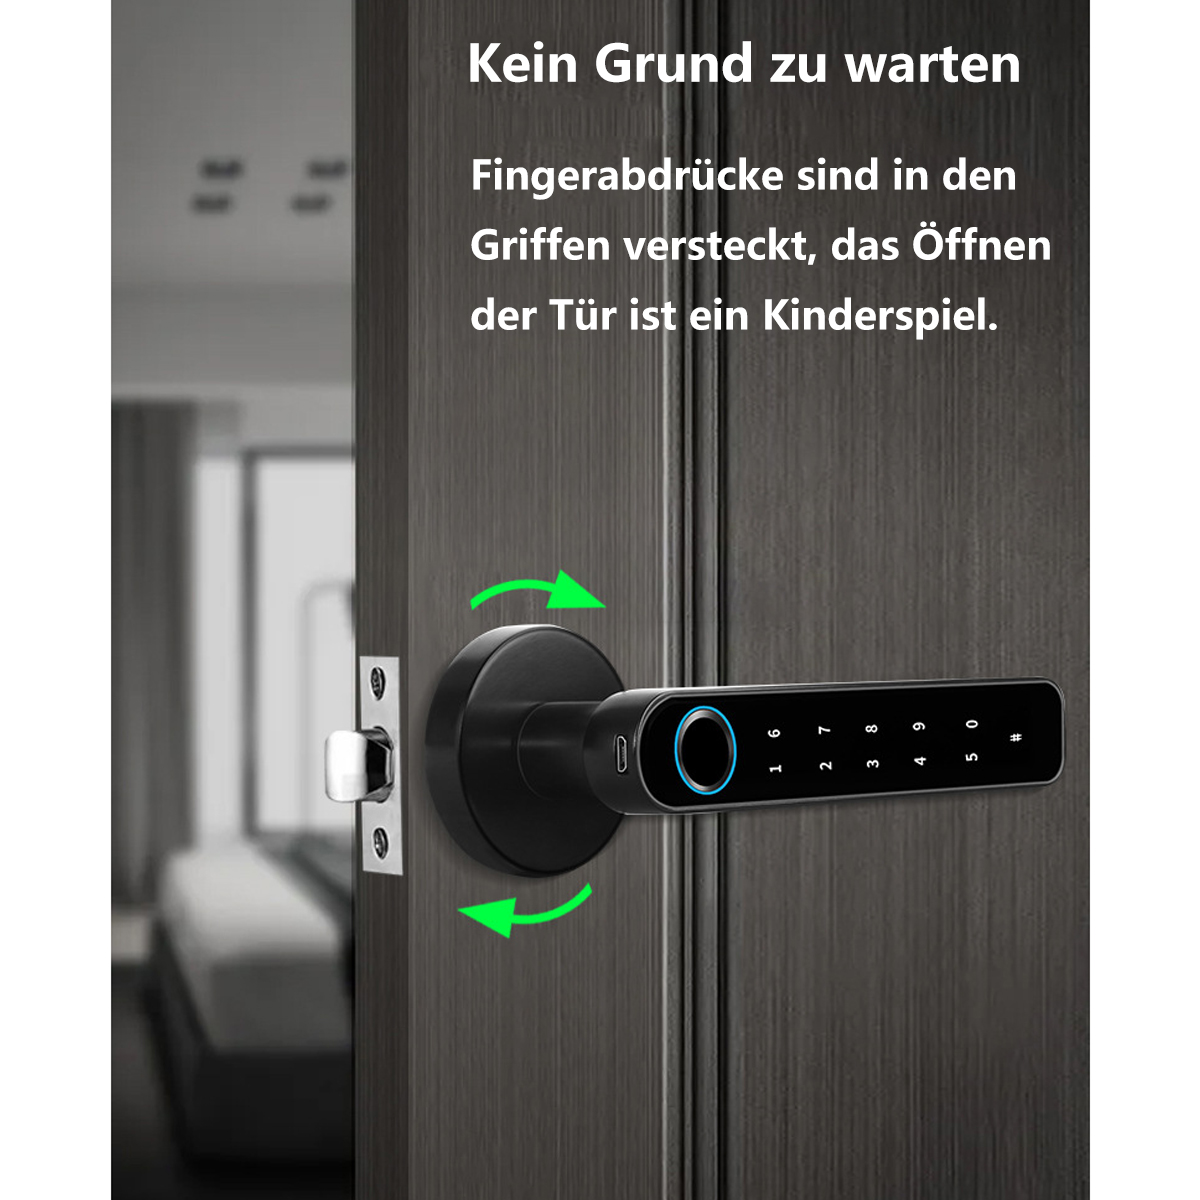 BYTELIKE weiß Unlock Büro Handy Einzeloperation, für Türschlösser, Lock Fingerprint Zimmertür Smart Bluetooth Smarte Türschloss Lock